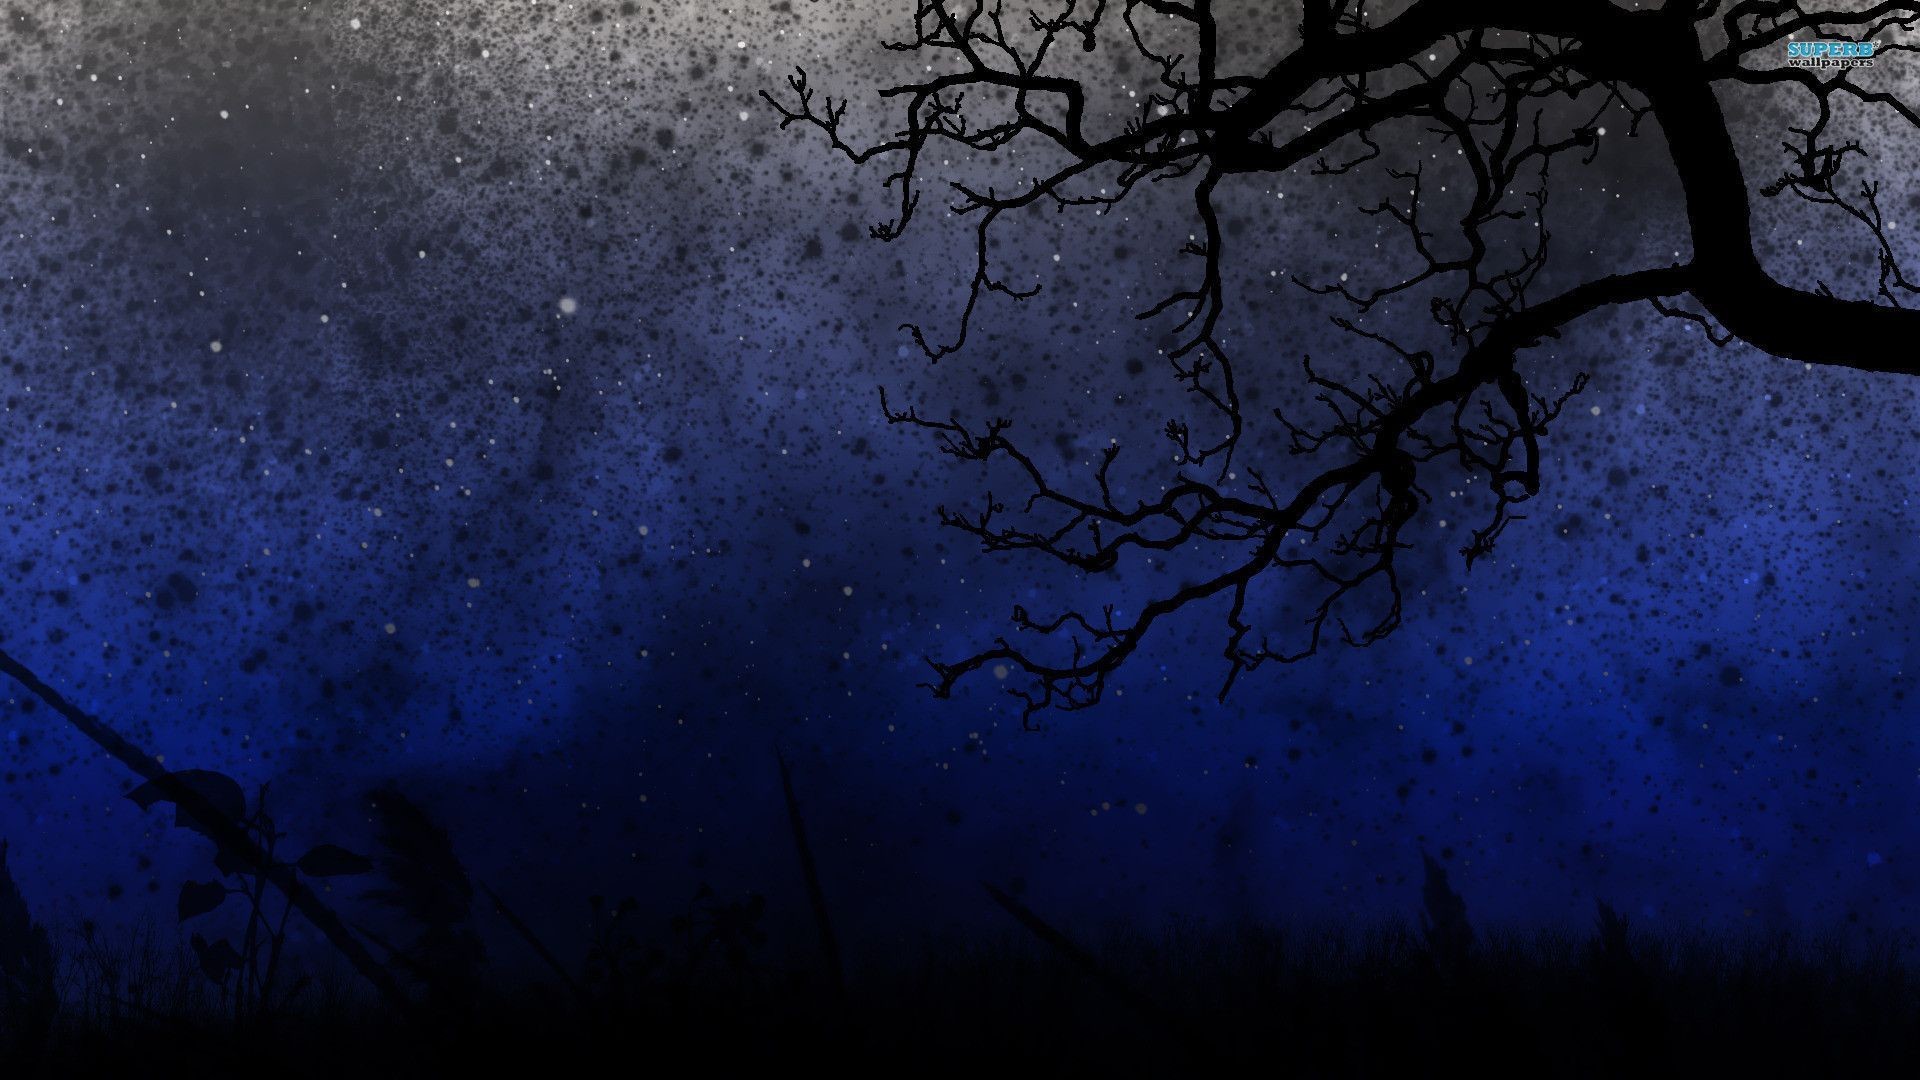 1920x1080 8. starry-night-sky-wallpaper8-600x338